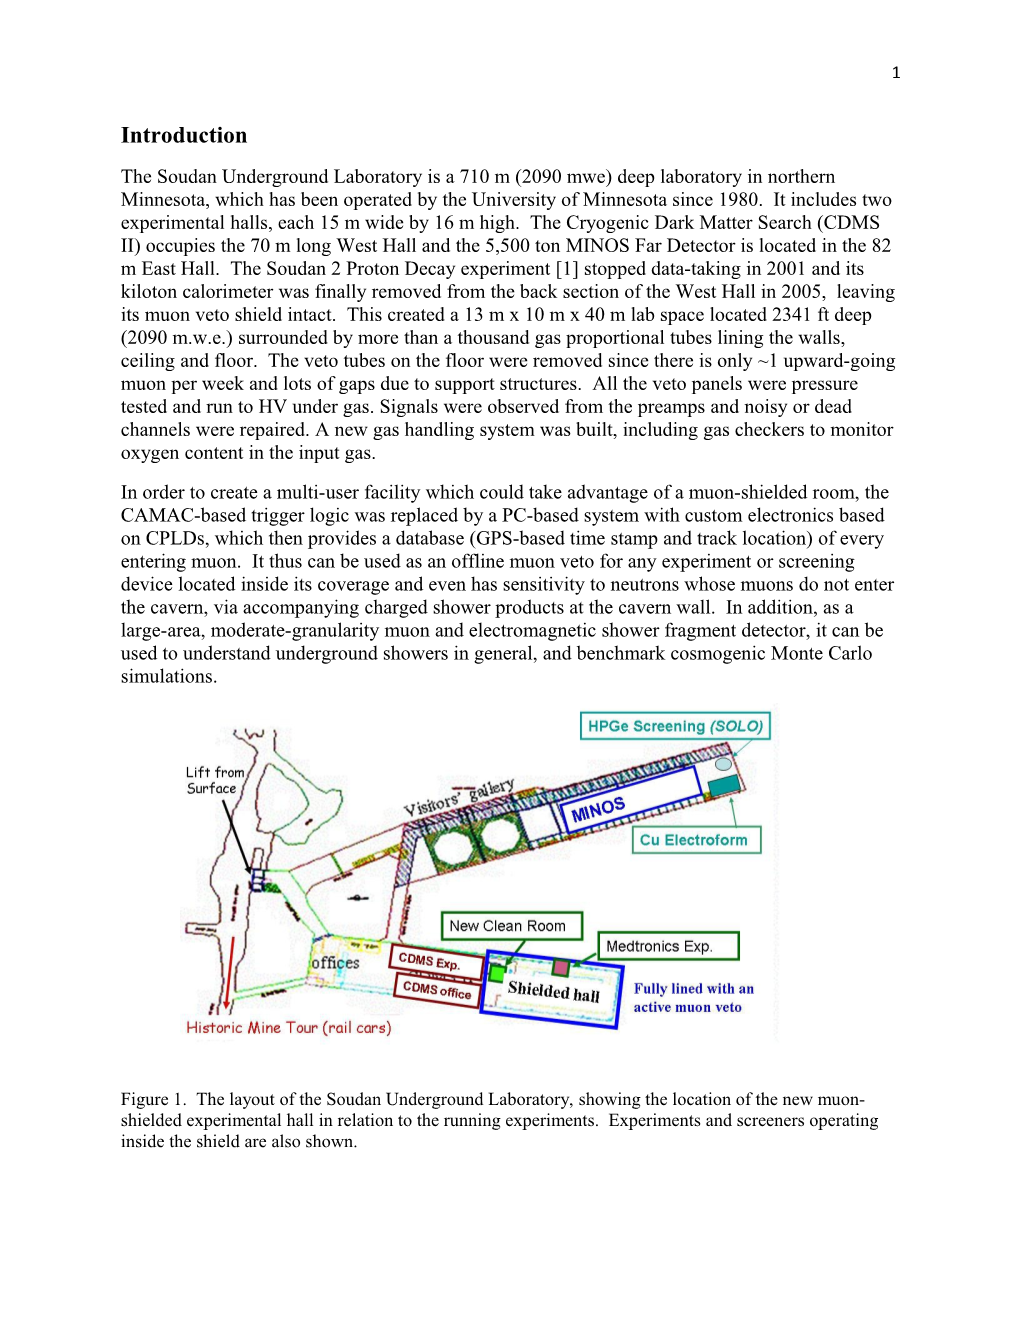 Angular Distribution Measurement and Shower Study in the Soudan Underground Laboratory